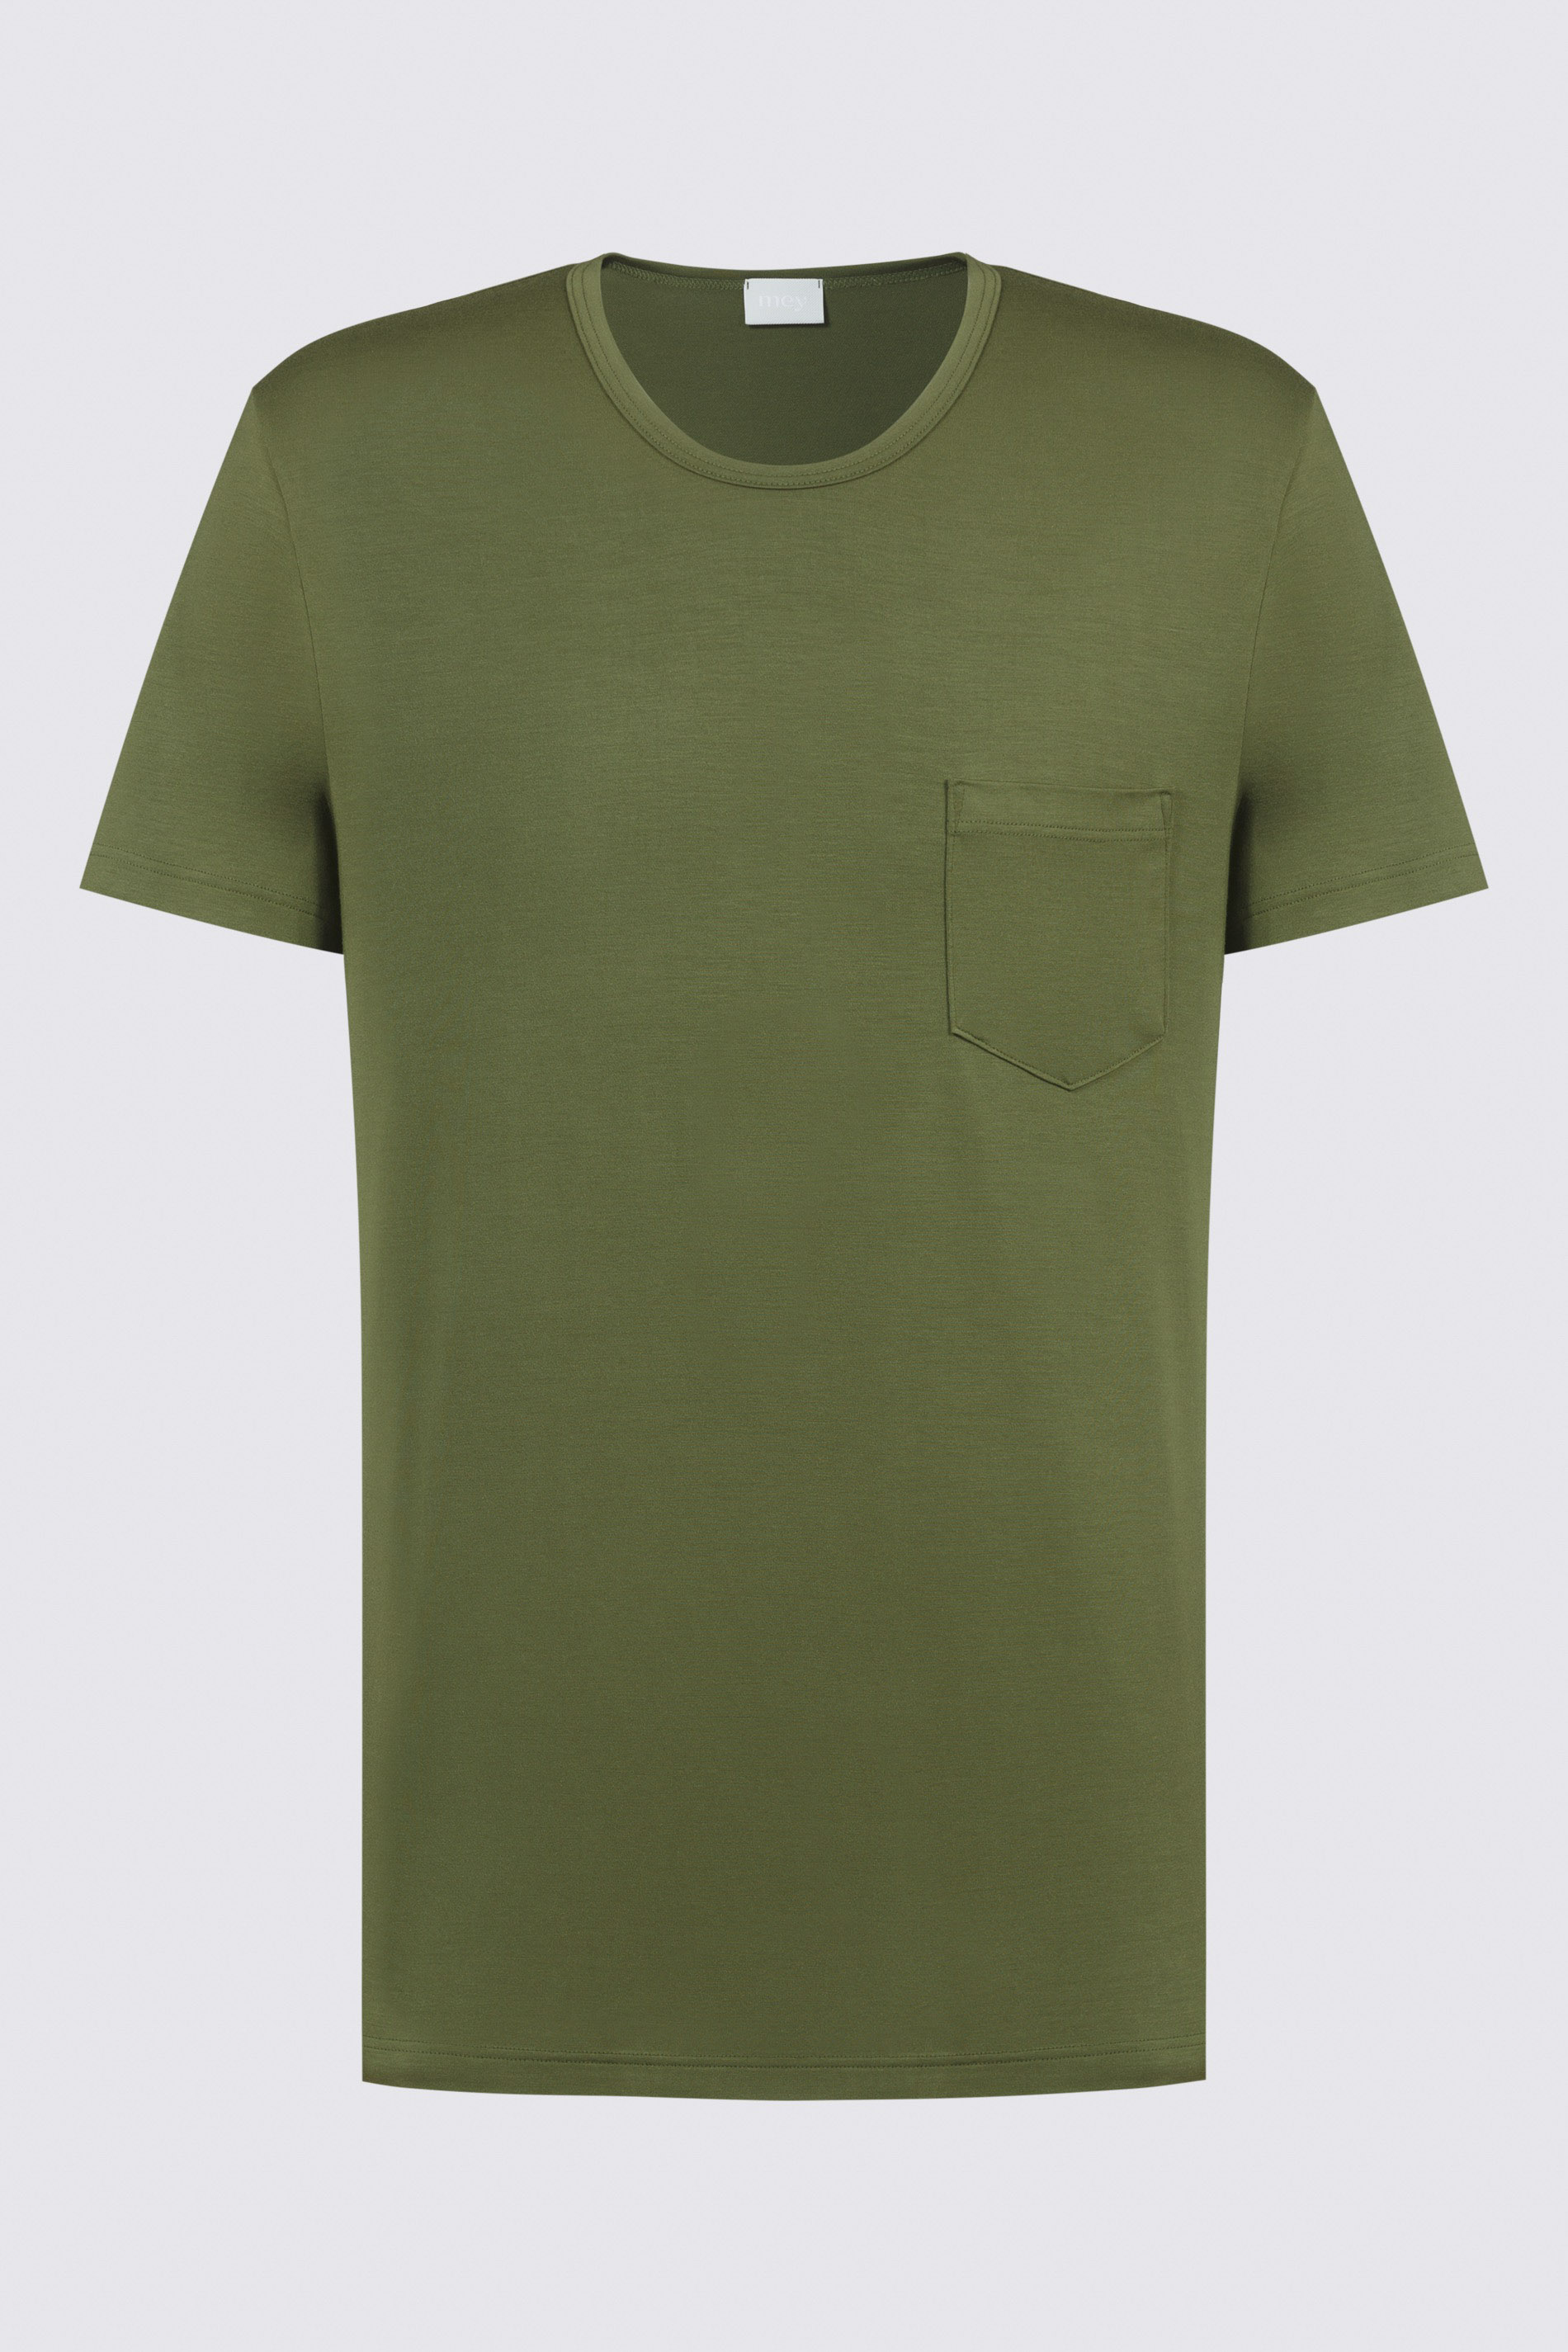 T-Shirt Serie Jefferson Modal Freisteller | mey®